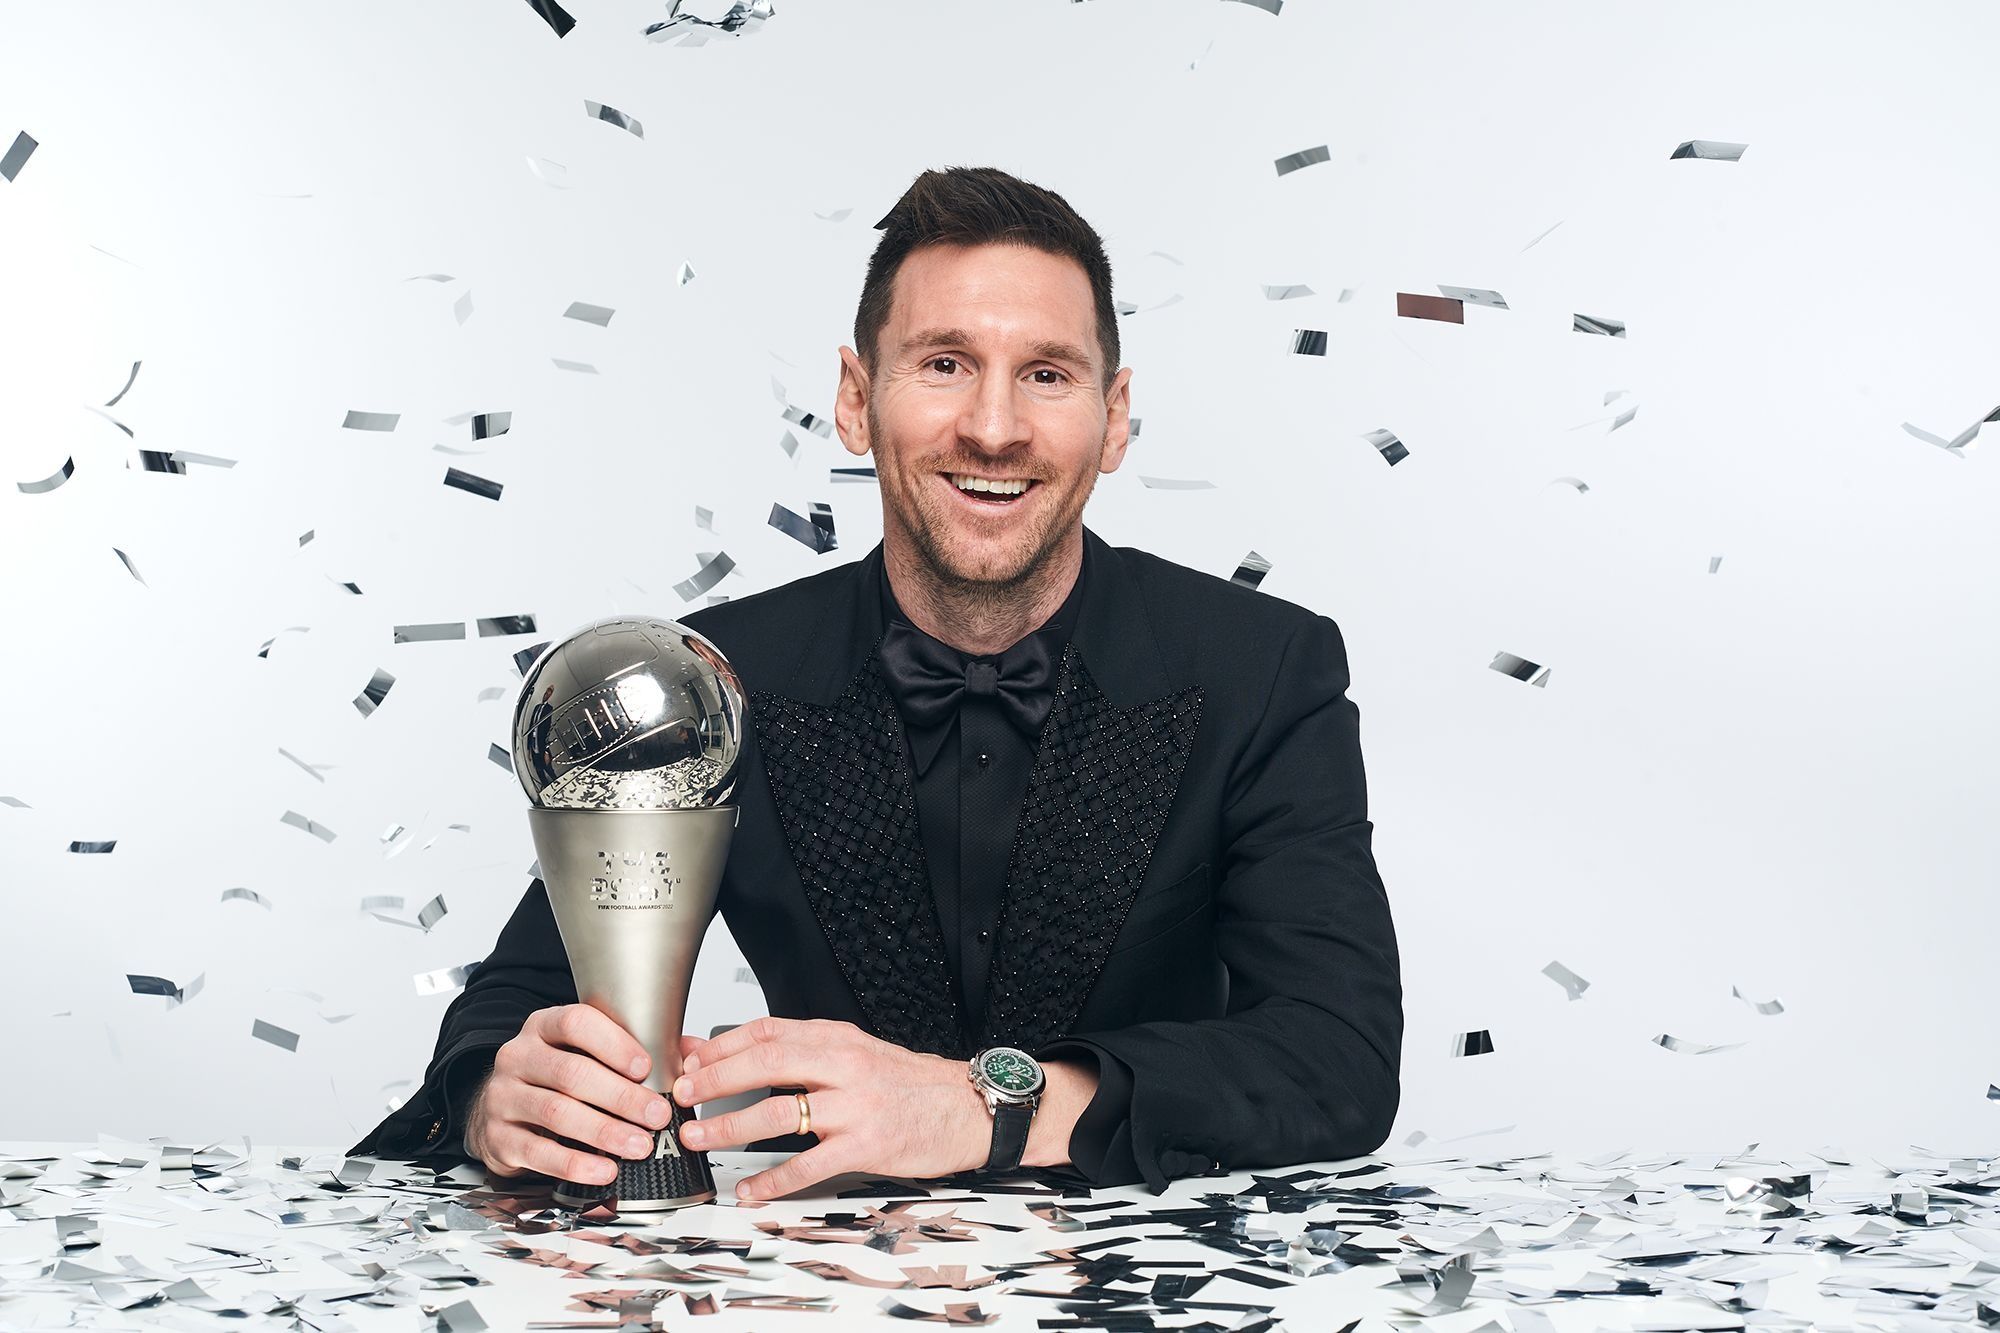 Barcelona Congratulate Messi On Winning The Best FIFA Men's Player Award